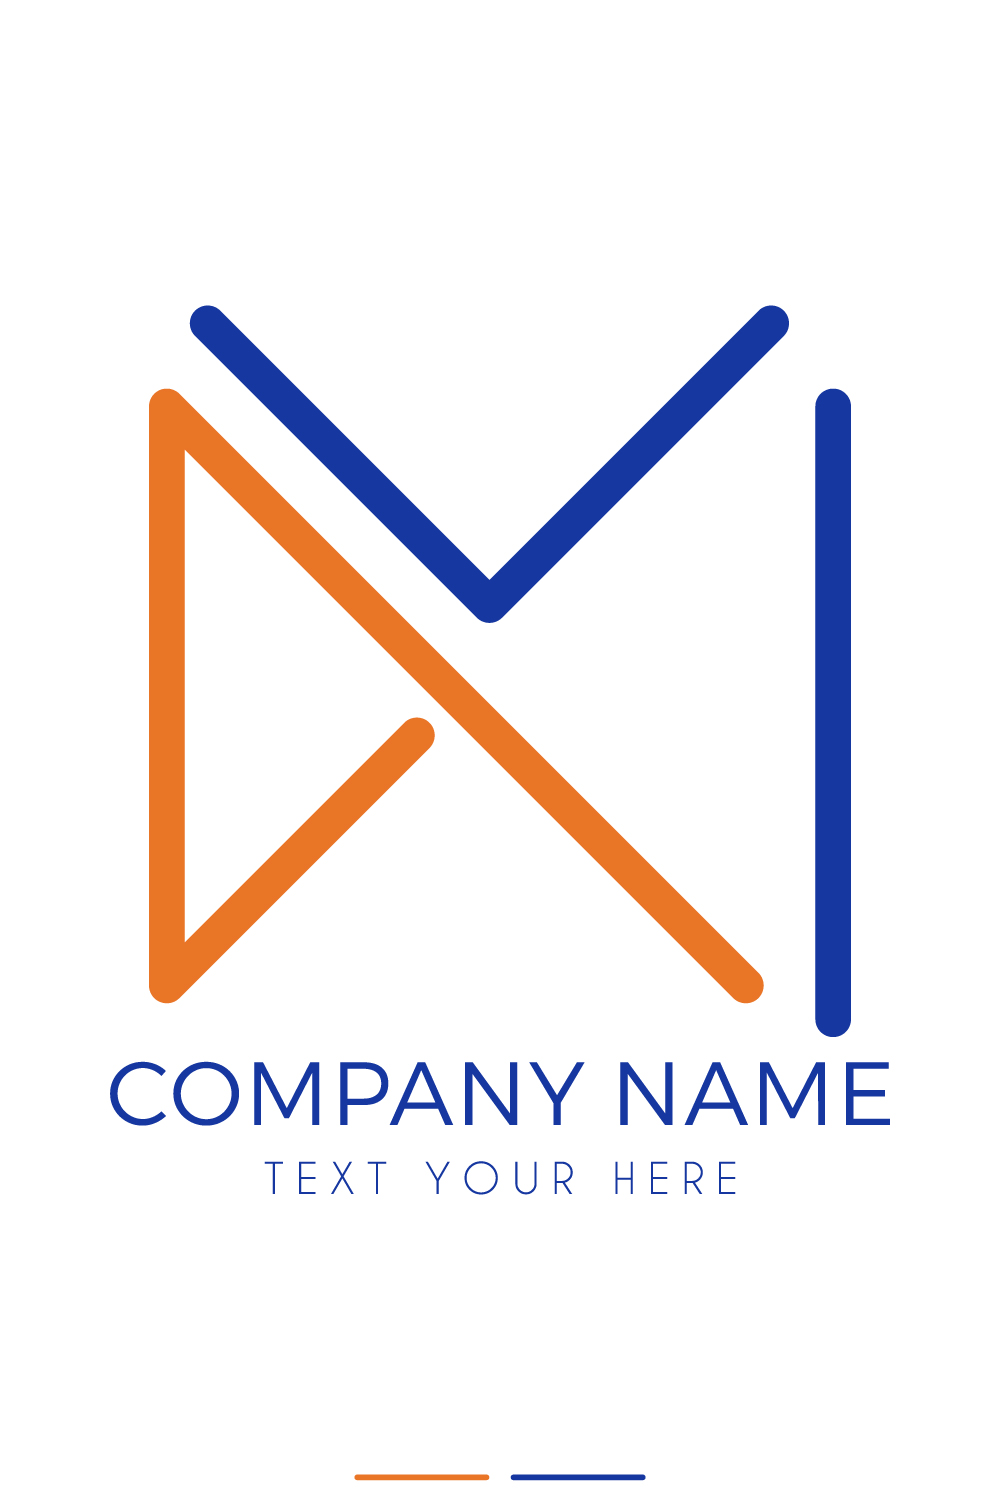 KM Company Group Linked Letter Logo Design pinterest image.